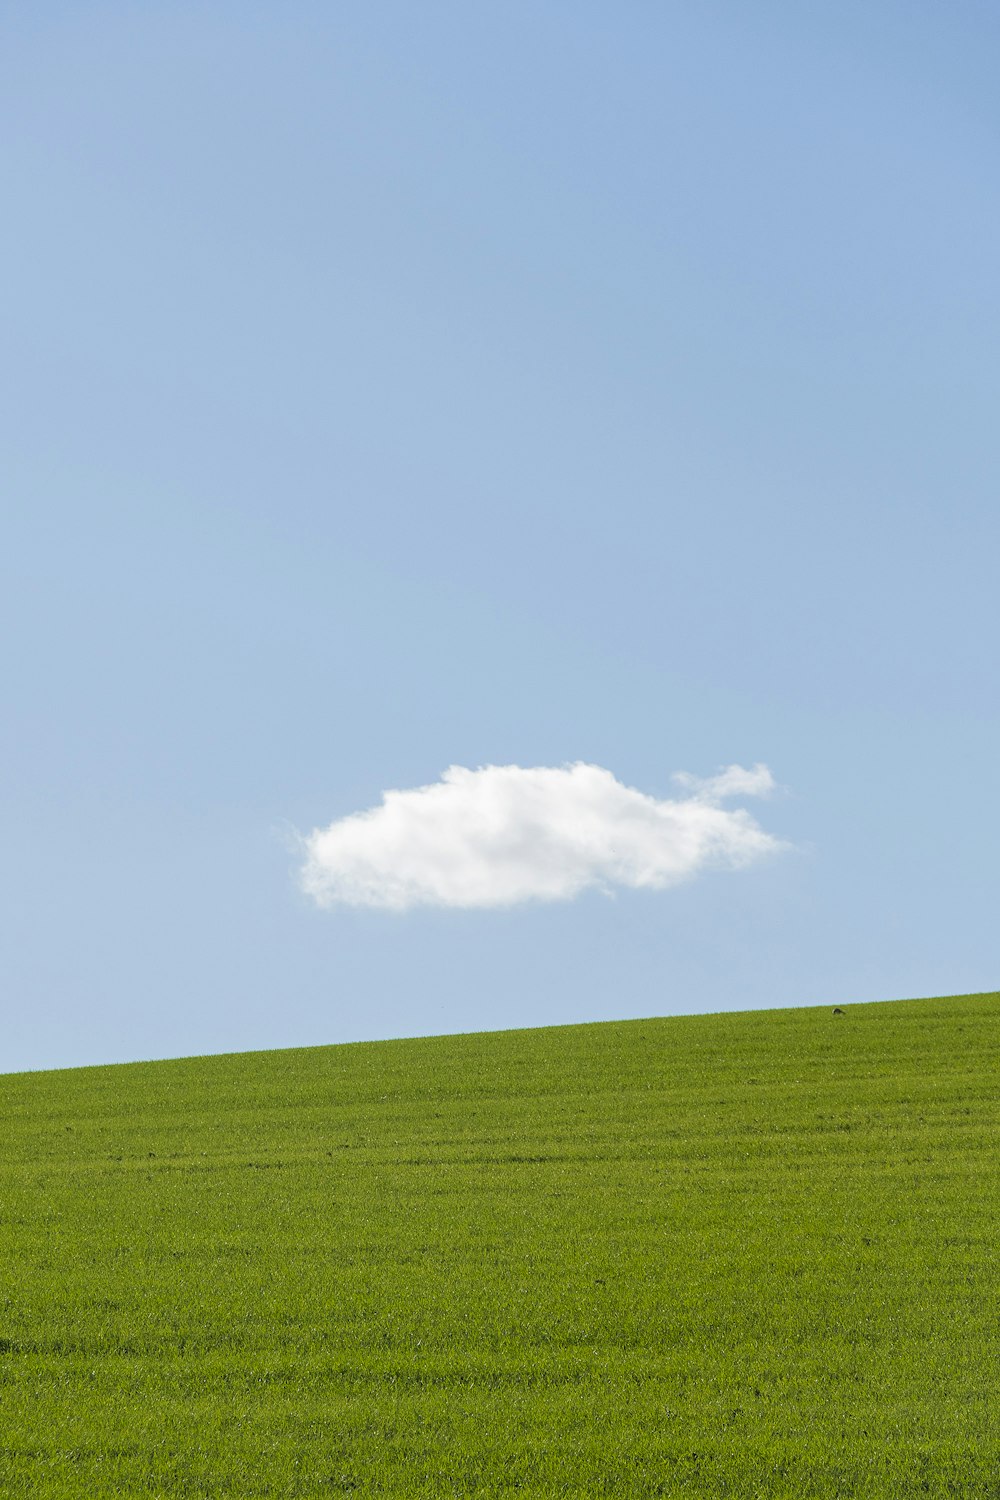 a lone tree in a green field under a blue sky